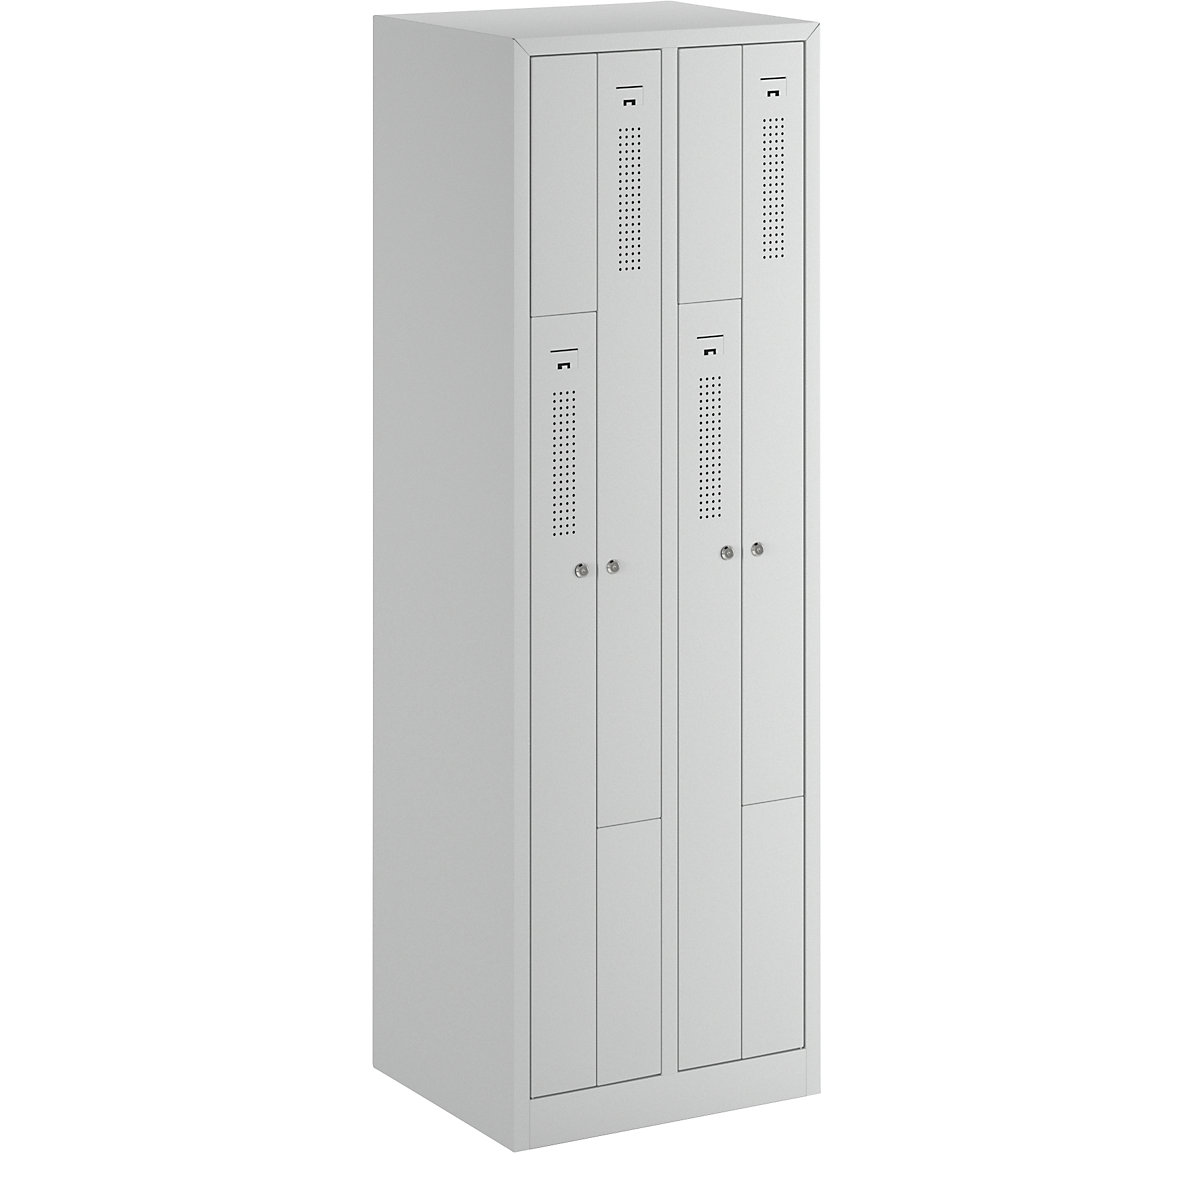 AMSTERDAM Z cloakroom locker – eurokraft basic, width 590 mm, 2 compartments, 4 doors, door colour light grey, body in light grey-6